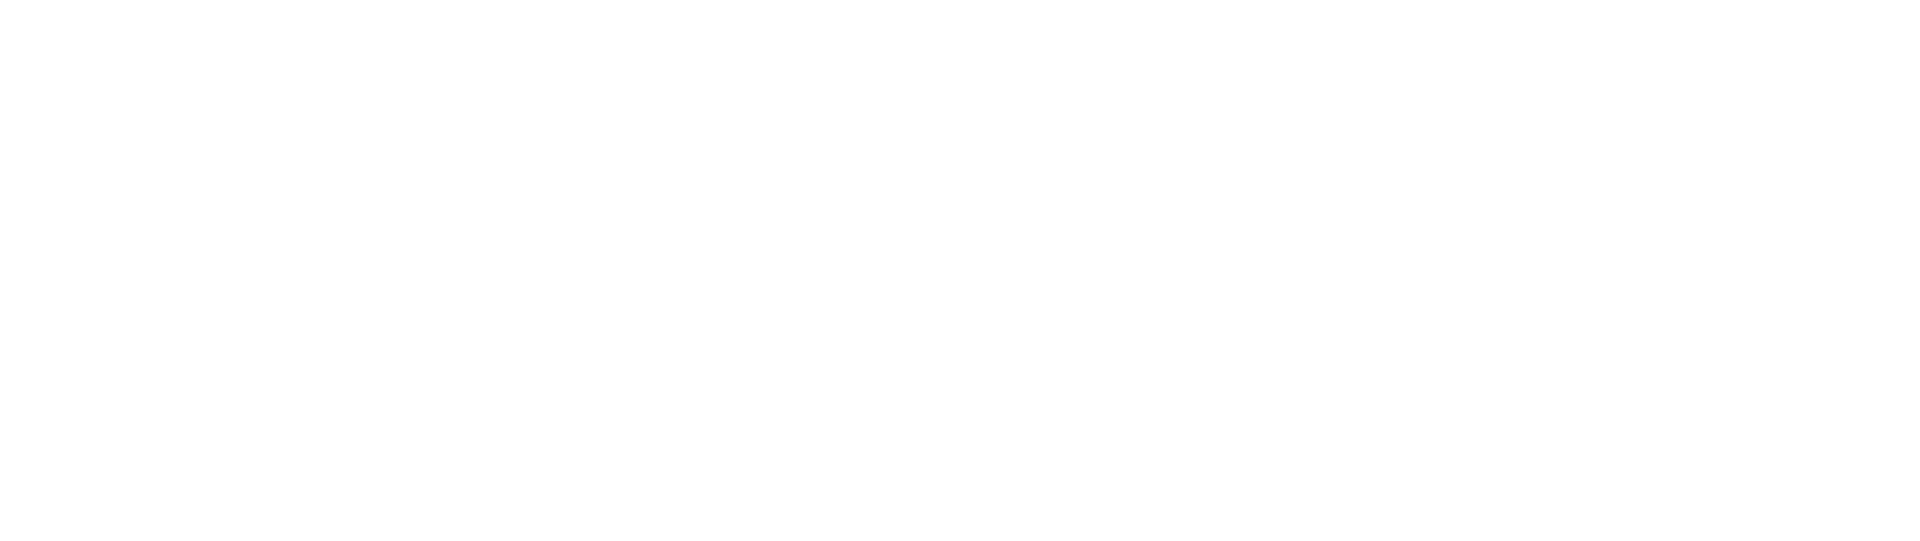 Auris-Full-Logo-White-Horizontal